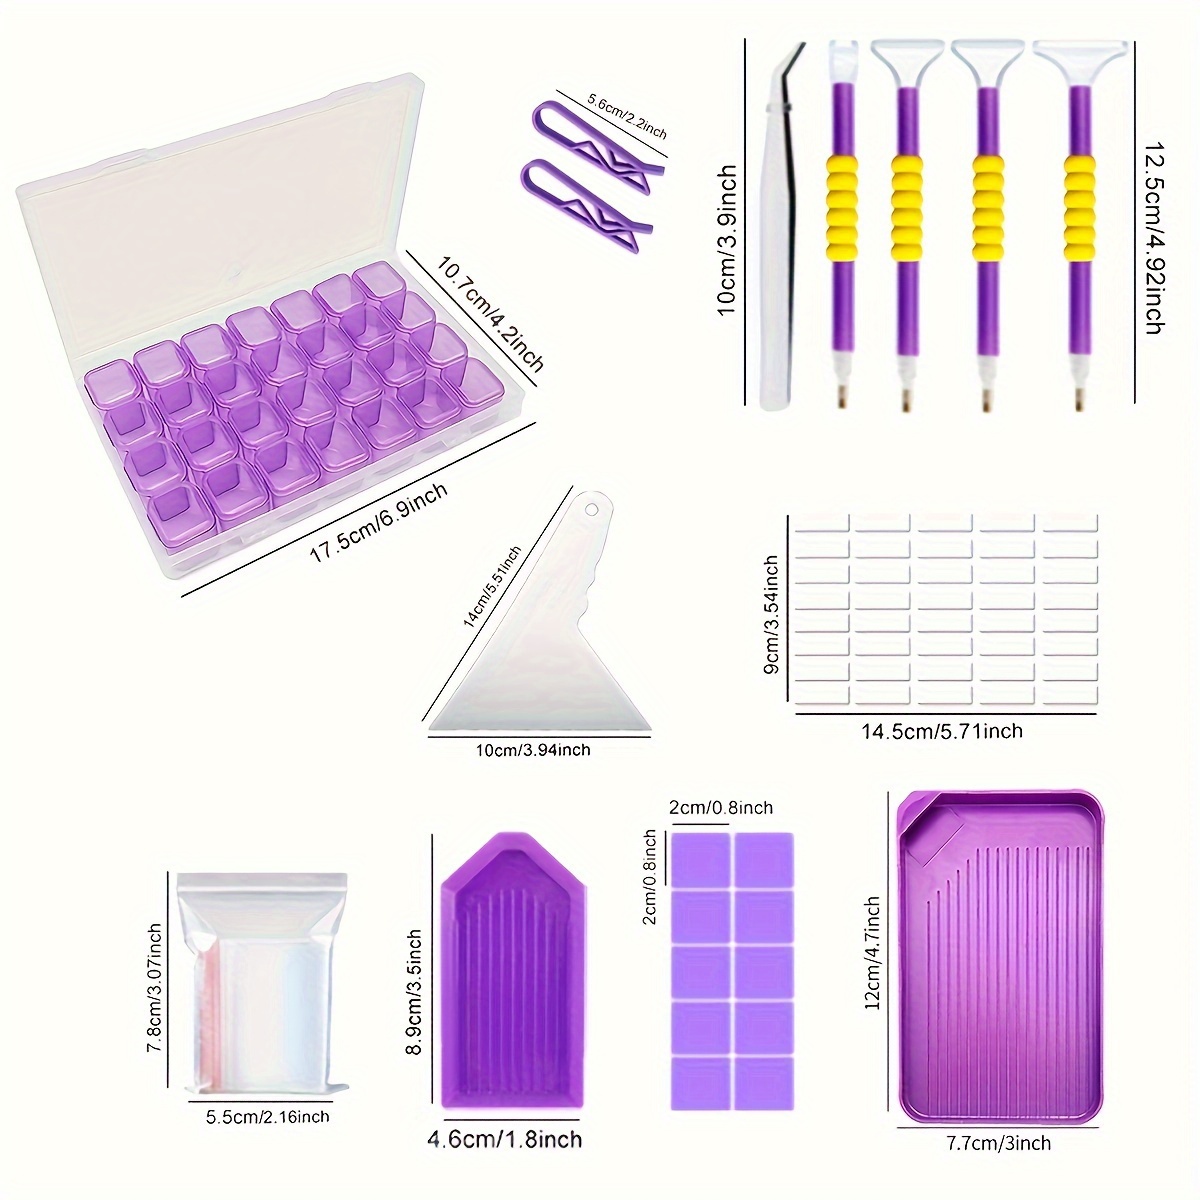 56pcs DIY Artificial Diamond Painting Tools Artificial Diamond Dots  Accessories Kit-Diamond Embroidery Box With Slots Cute Purple